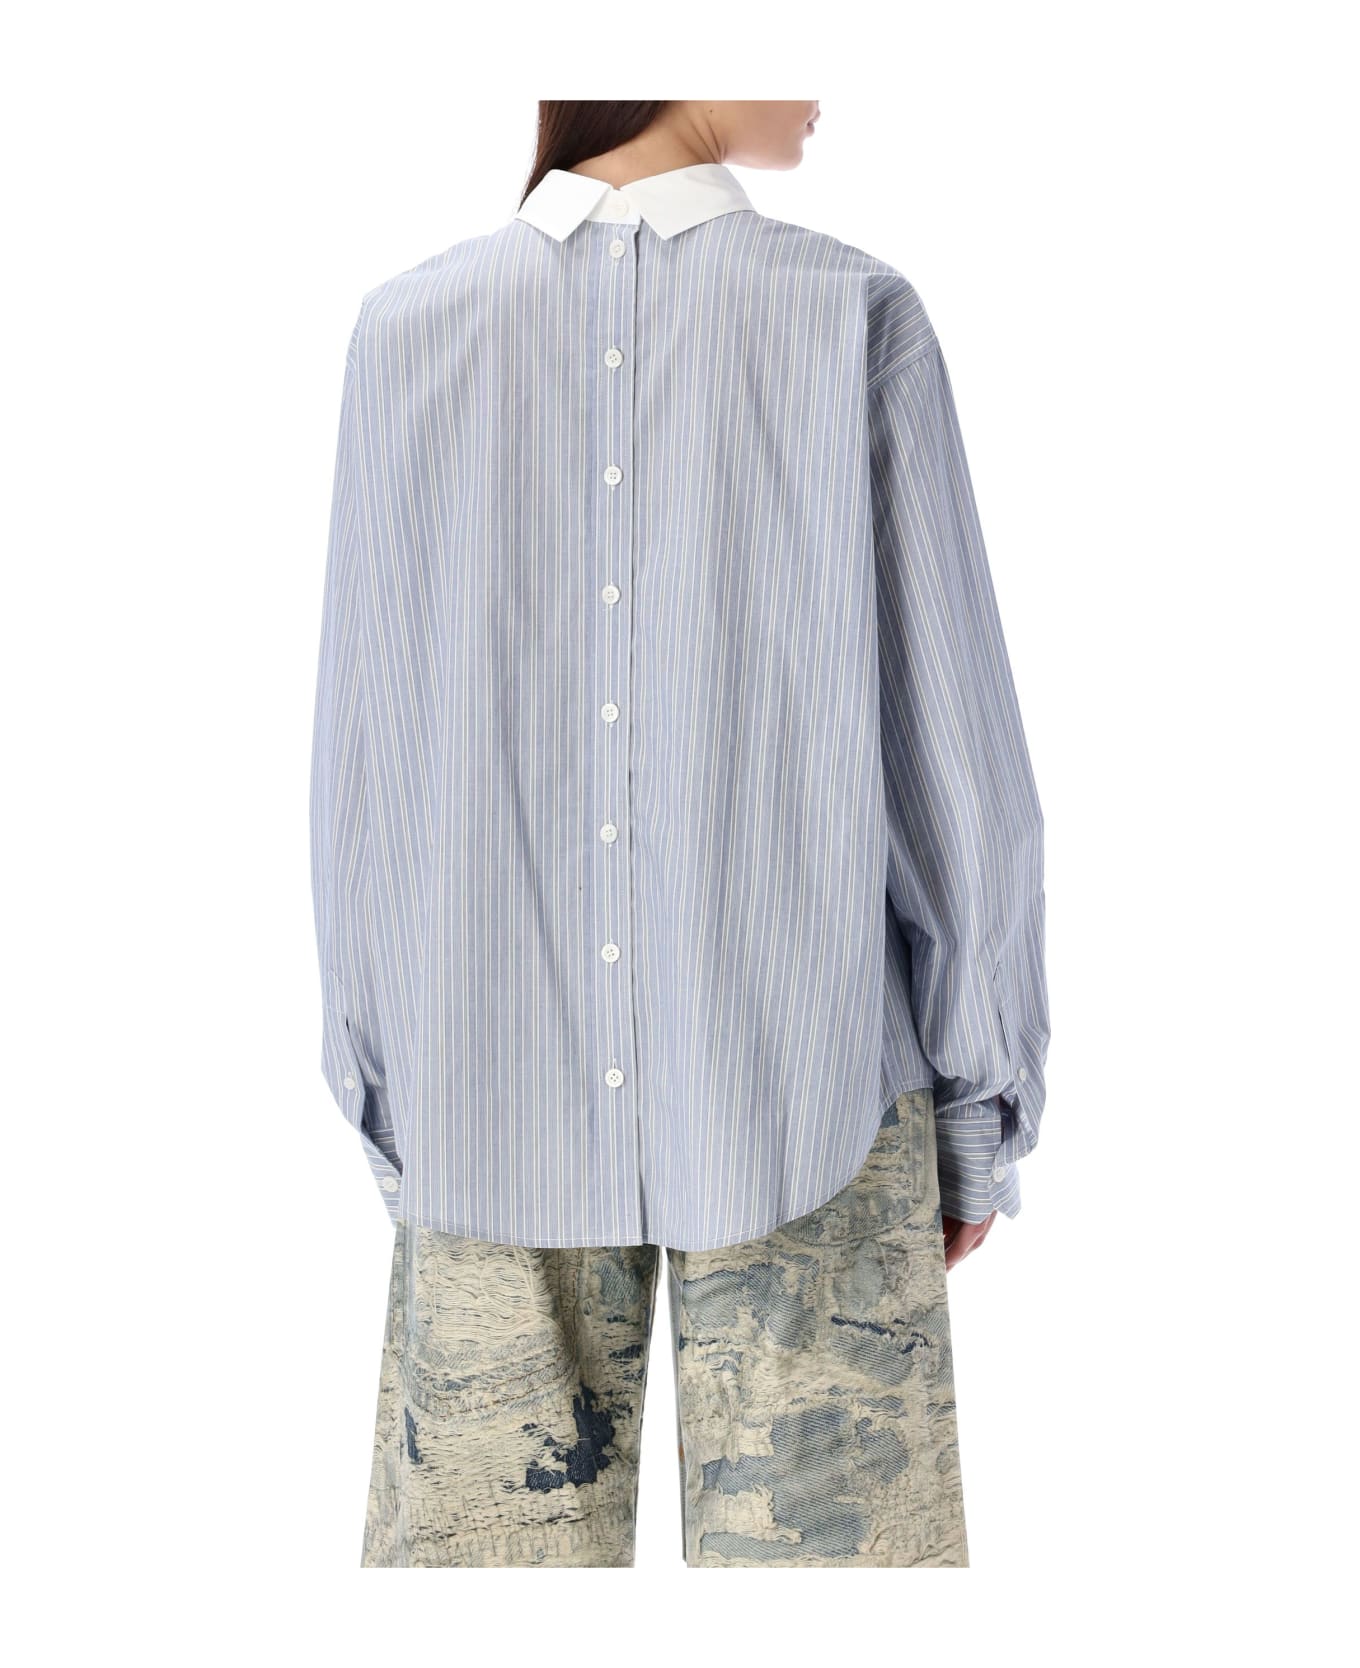 Acne Studios Stripe Shirt - BLUE WHITE STIPE